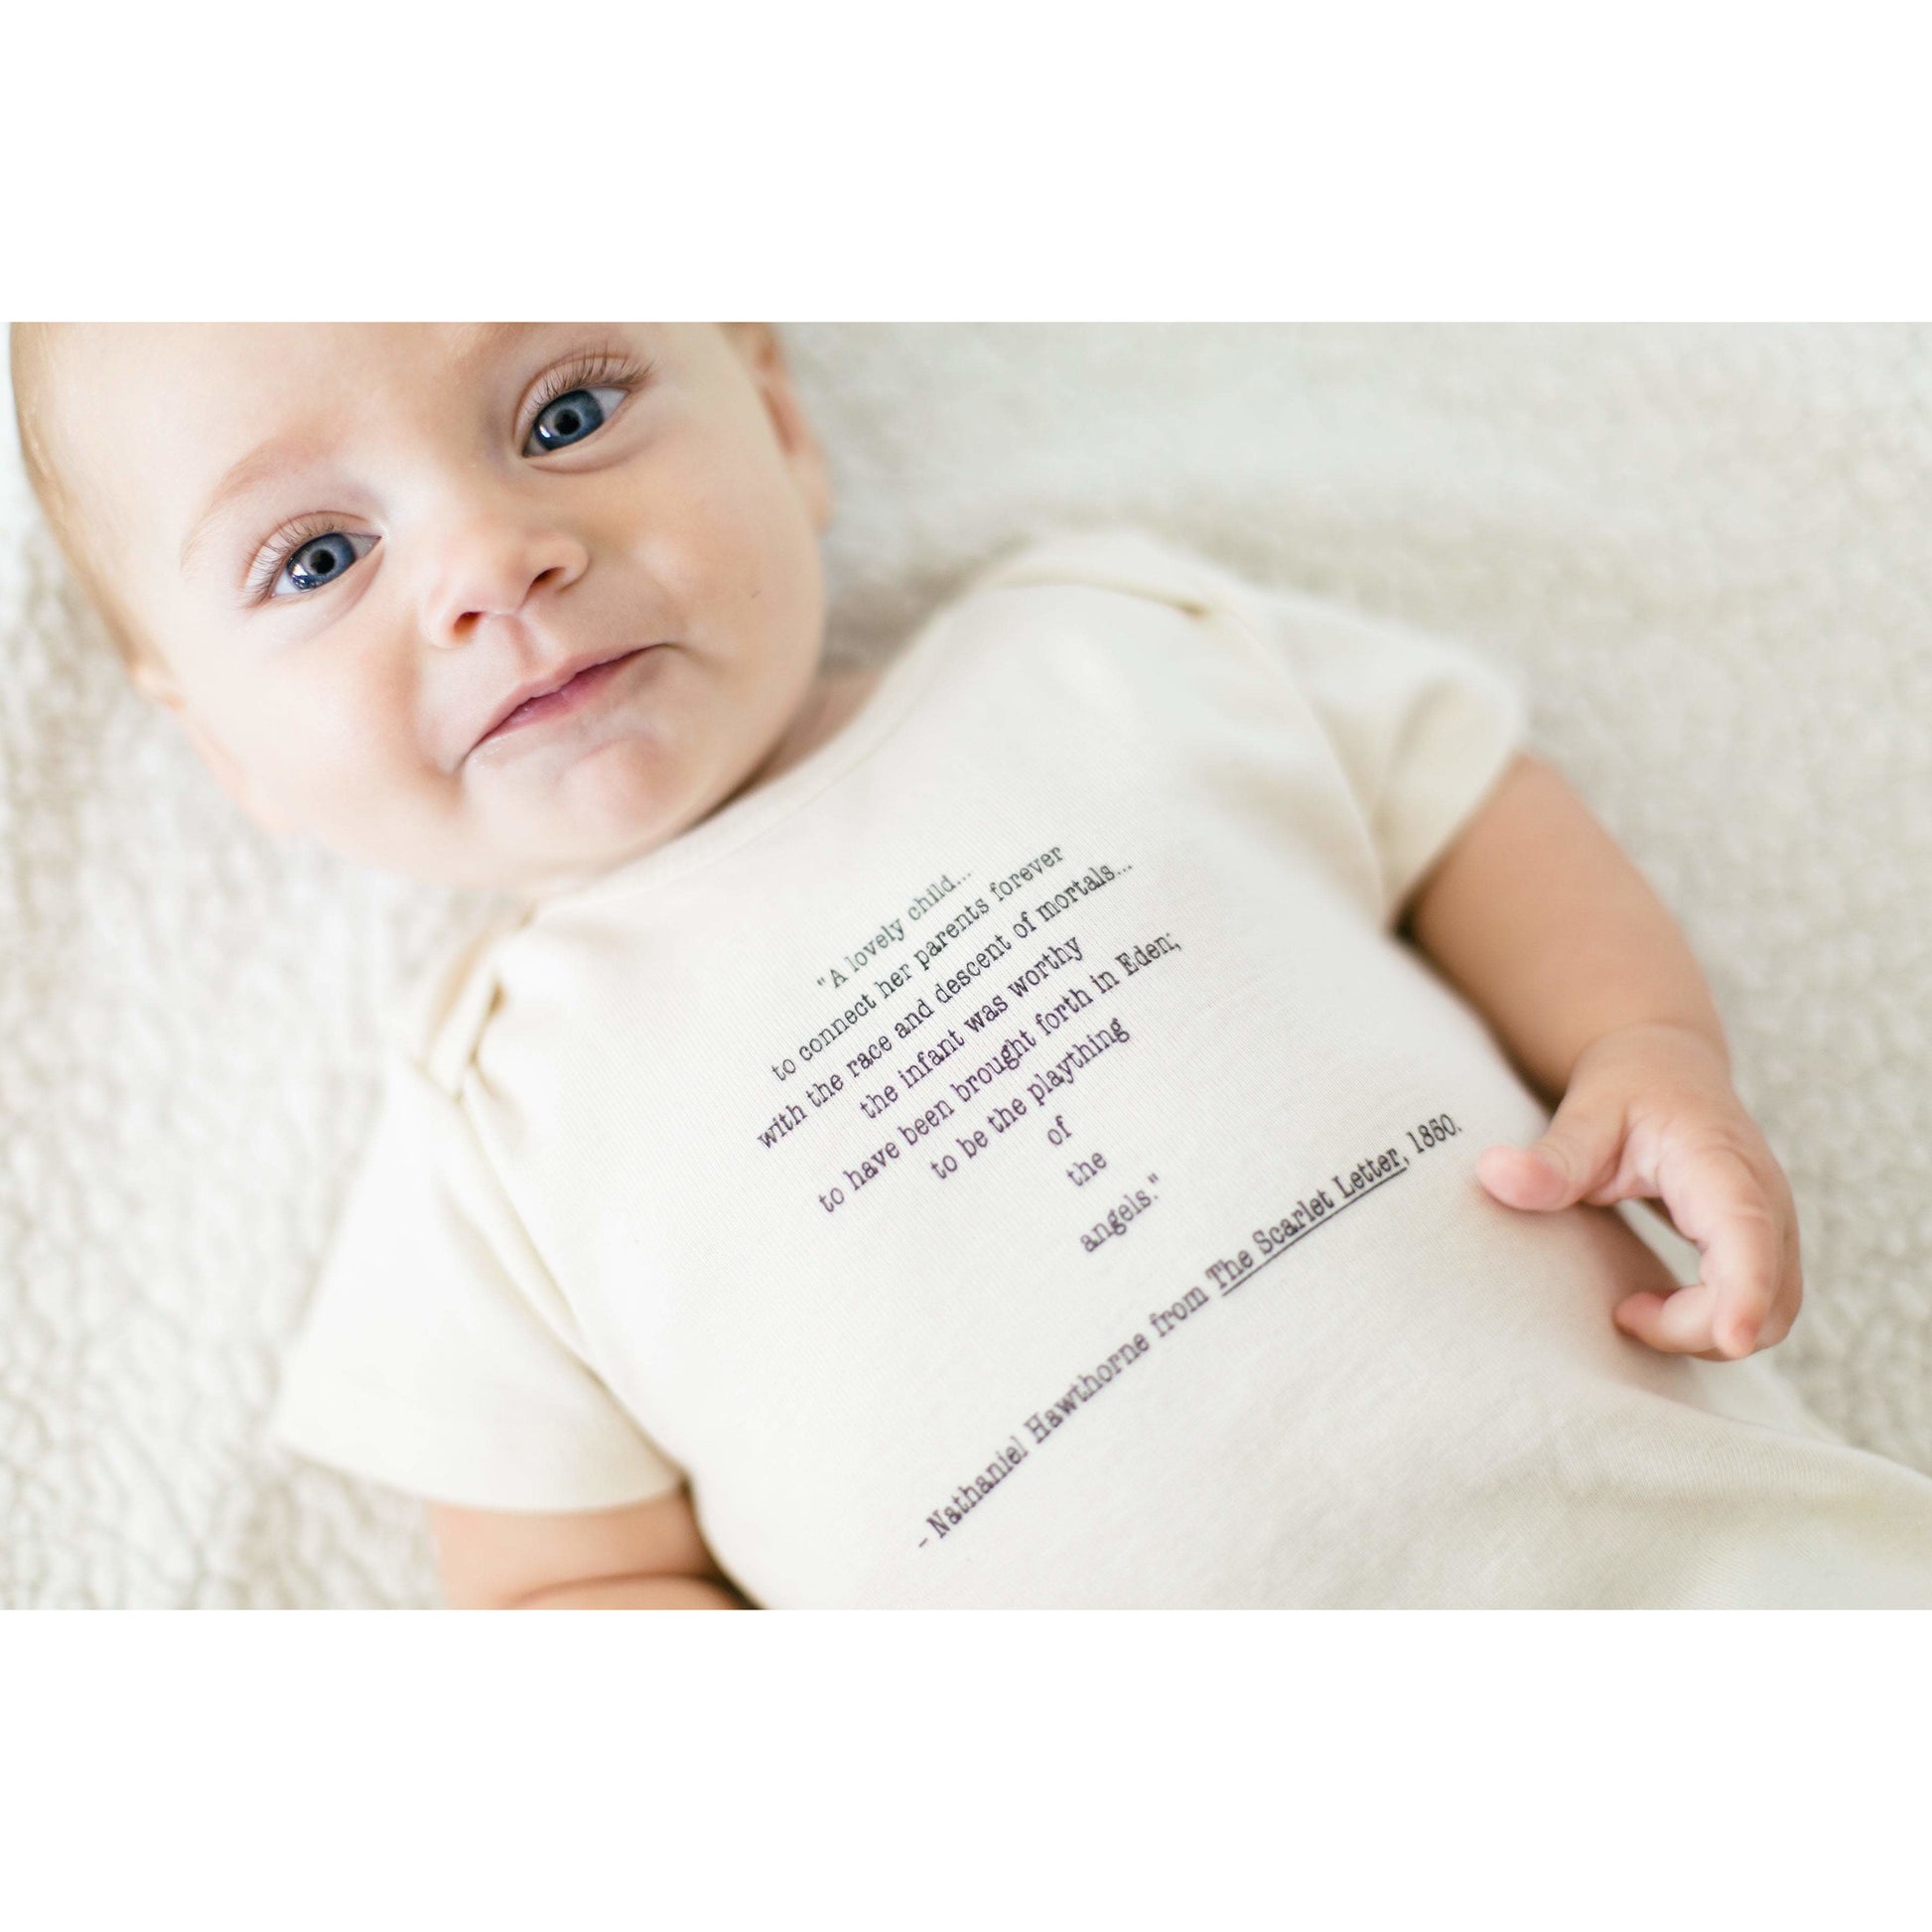 Organic cotton baby onesie - Nathaniel Hawthorne - Simply Chickie